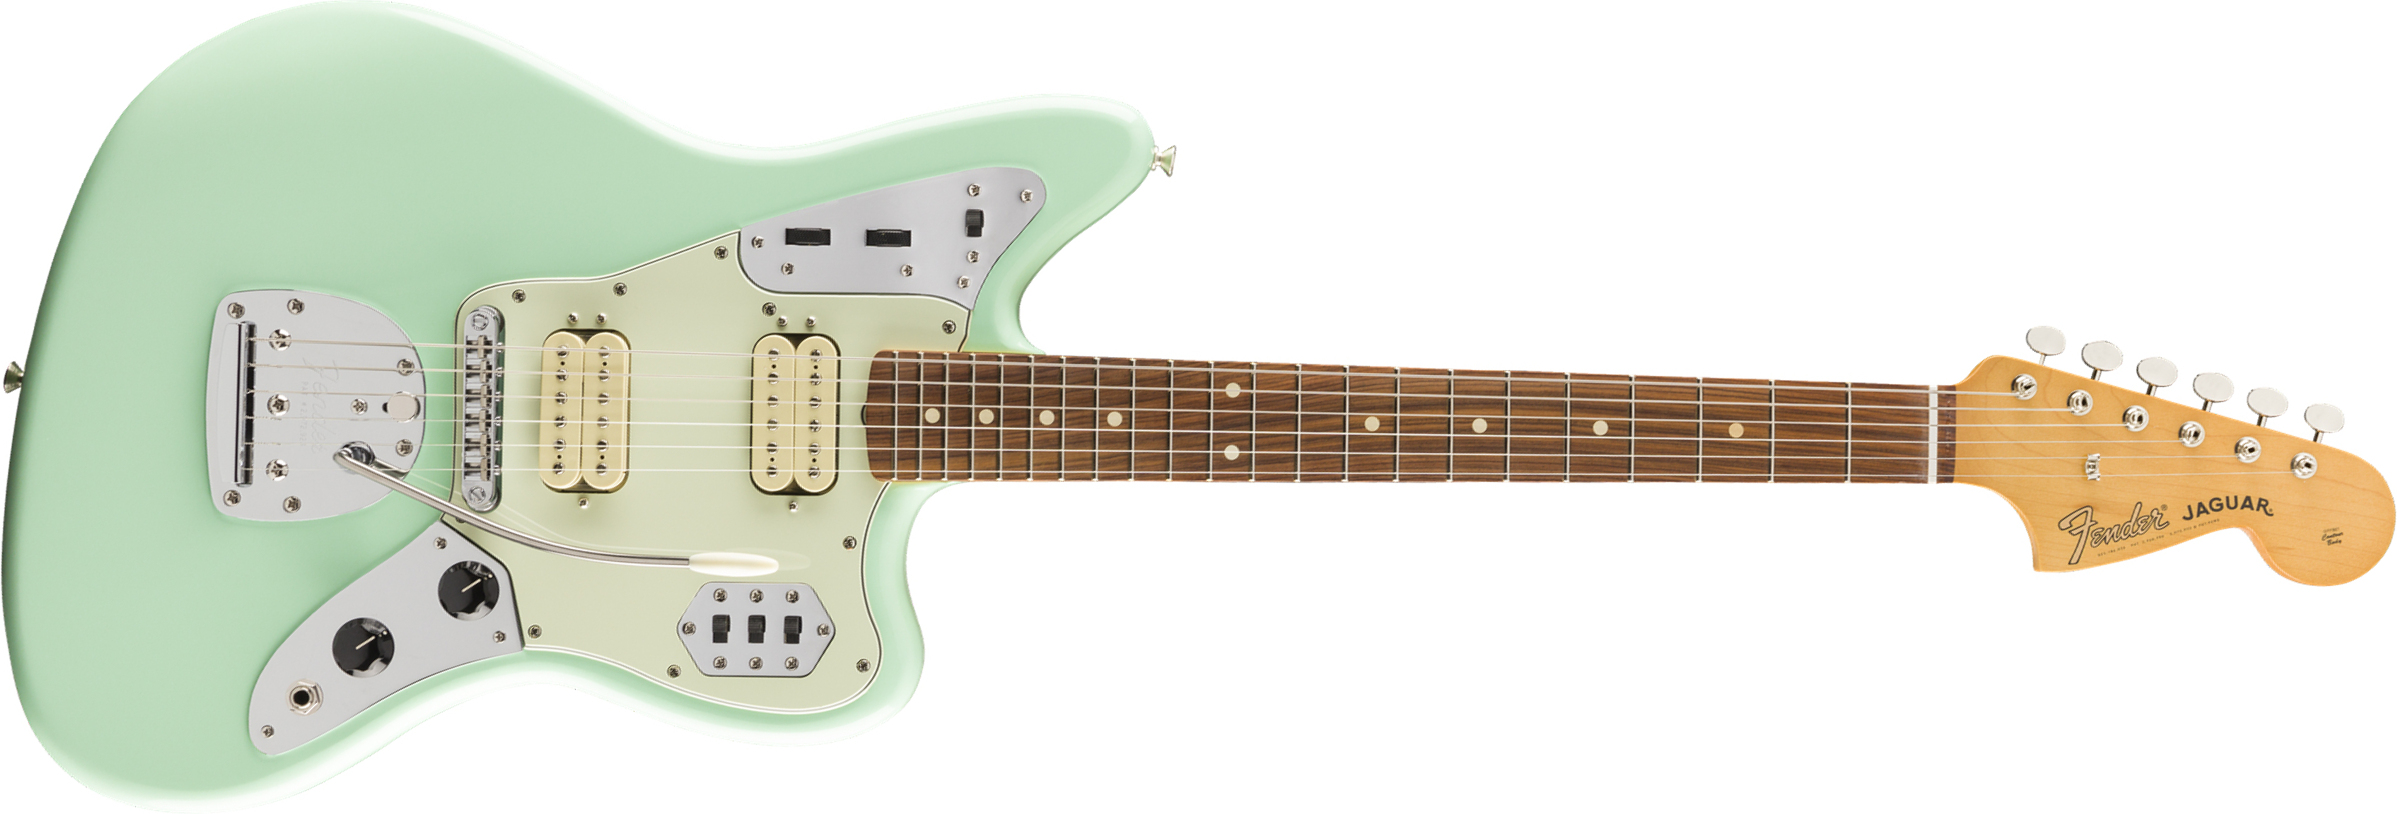 Fender Jaguar 60s Vintera Modified Hh Mex Pf - Surf Green - Retro rock electric guitar - Main picture